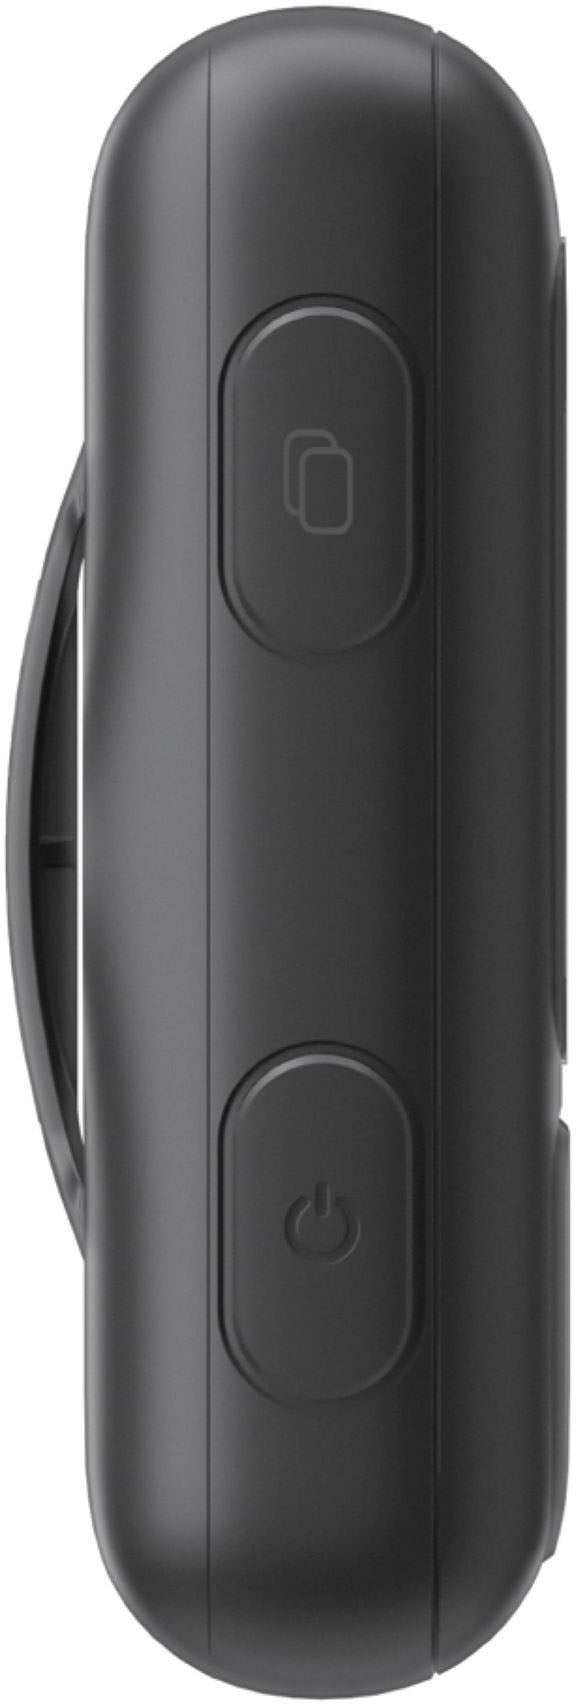 Insta360 - GPS Smart Universal Remote - Black_2